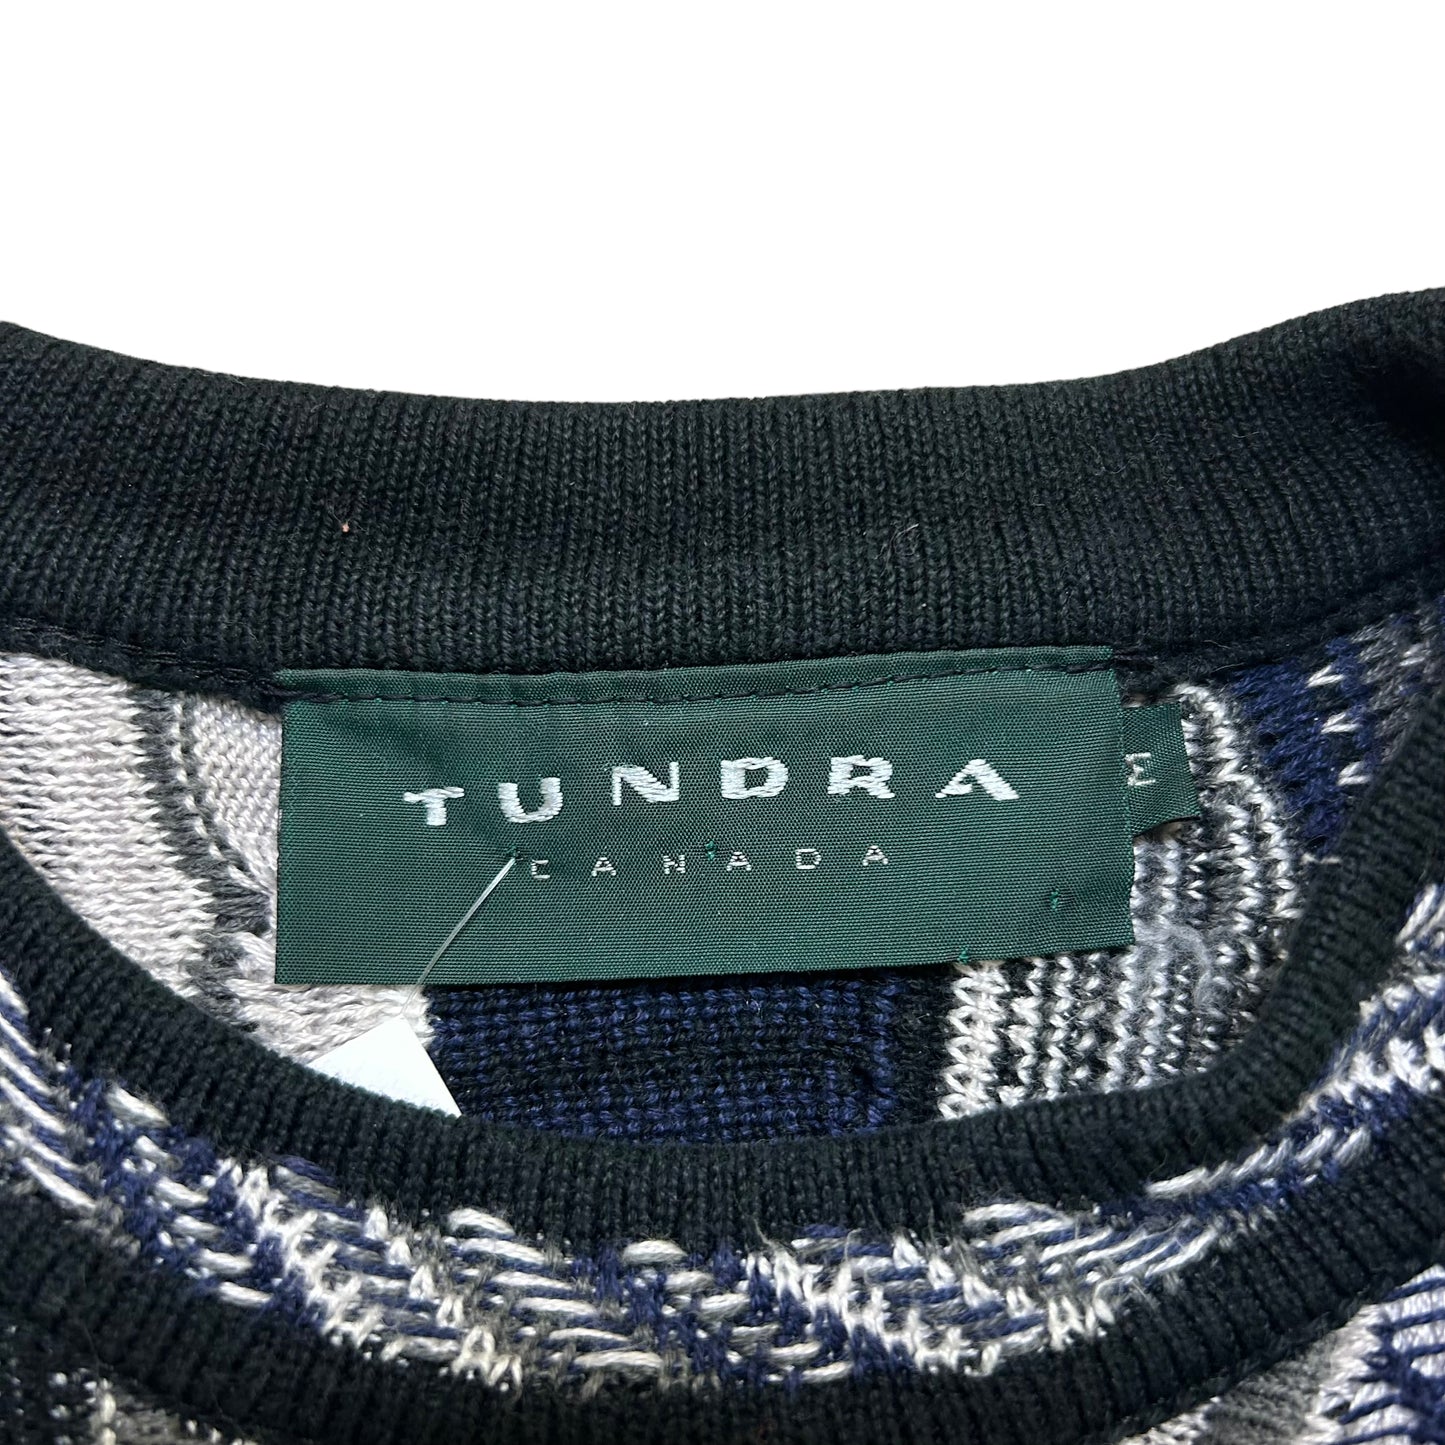 Vintage 1990s Tundra Canada Navy/Black/White Coogi Style Knit Sweater - Size Medium